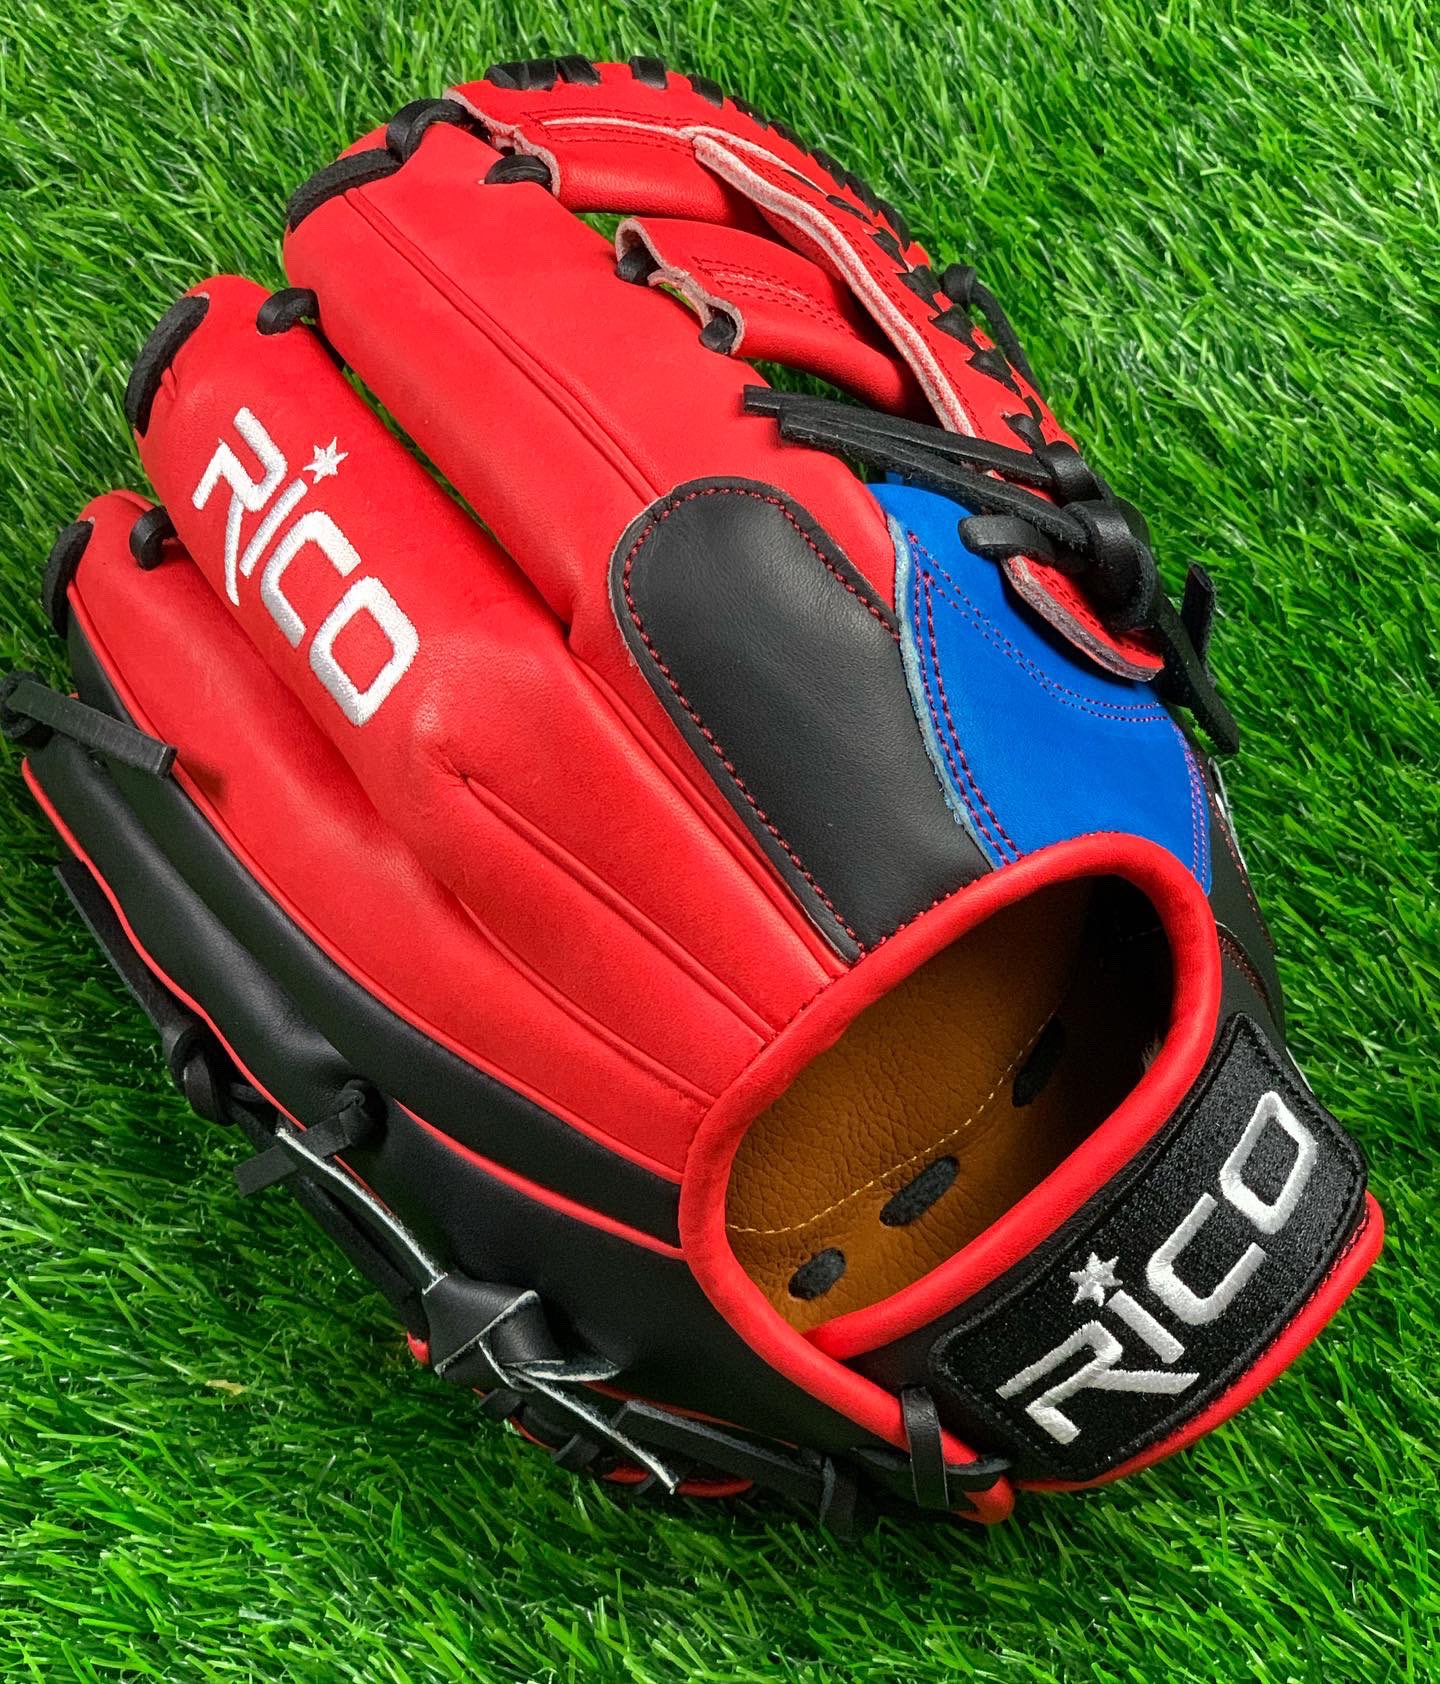 Rico Gloves - Catchers mitt ! www.ricogloves.com/custom